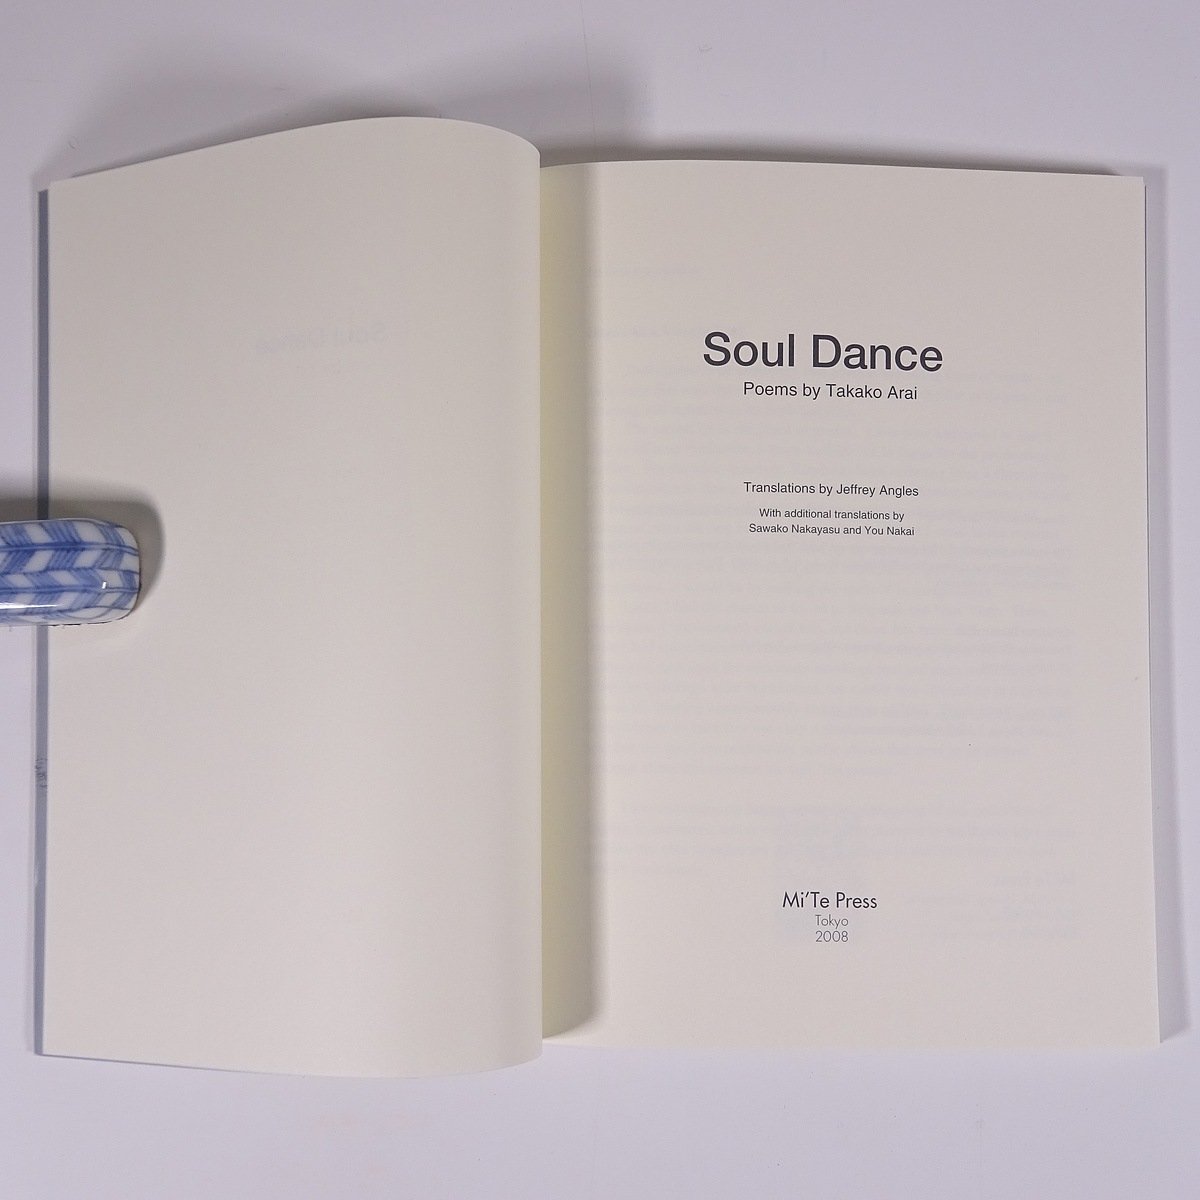 【英訳書籍】 Soul Dance タマシイ・ダンス 新井高子 2008 単行本 文学 文芸 詩集 英語 英文 英訳_画像5